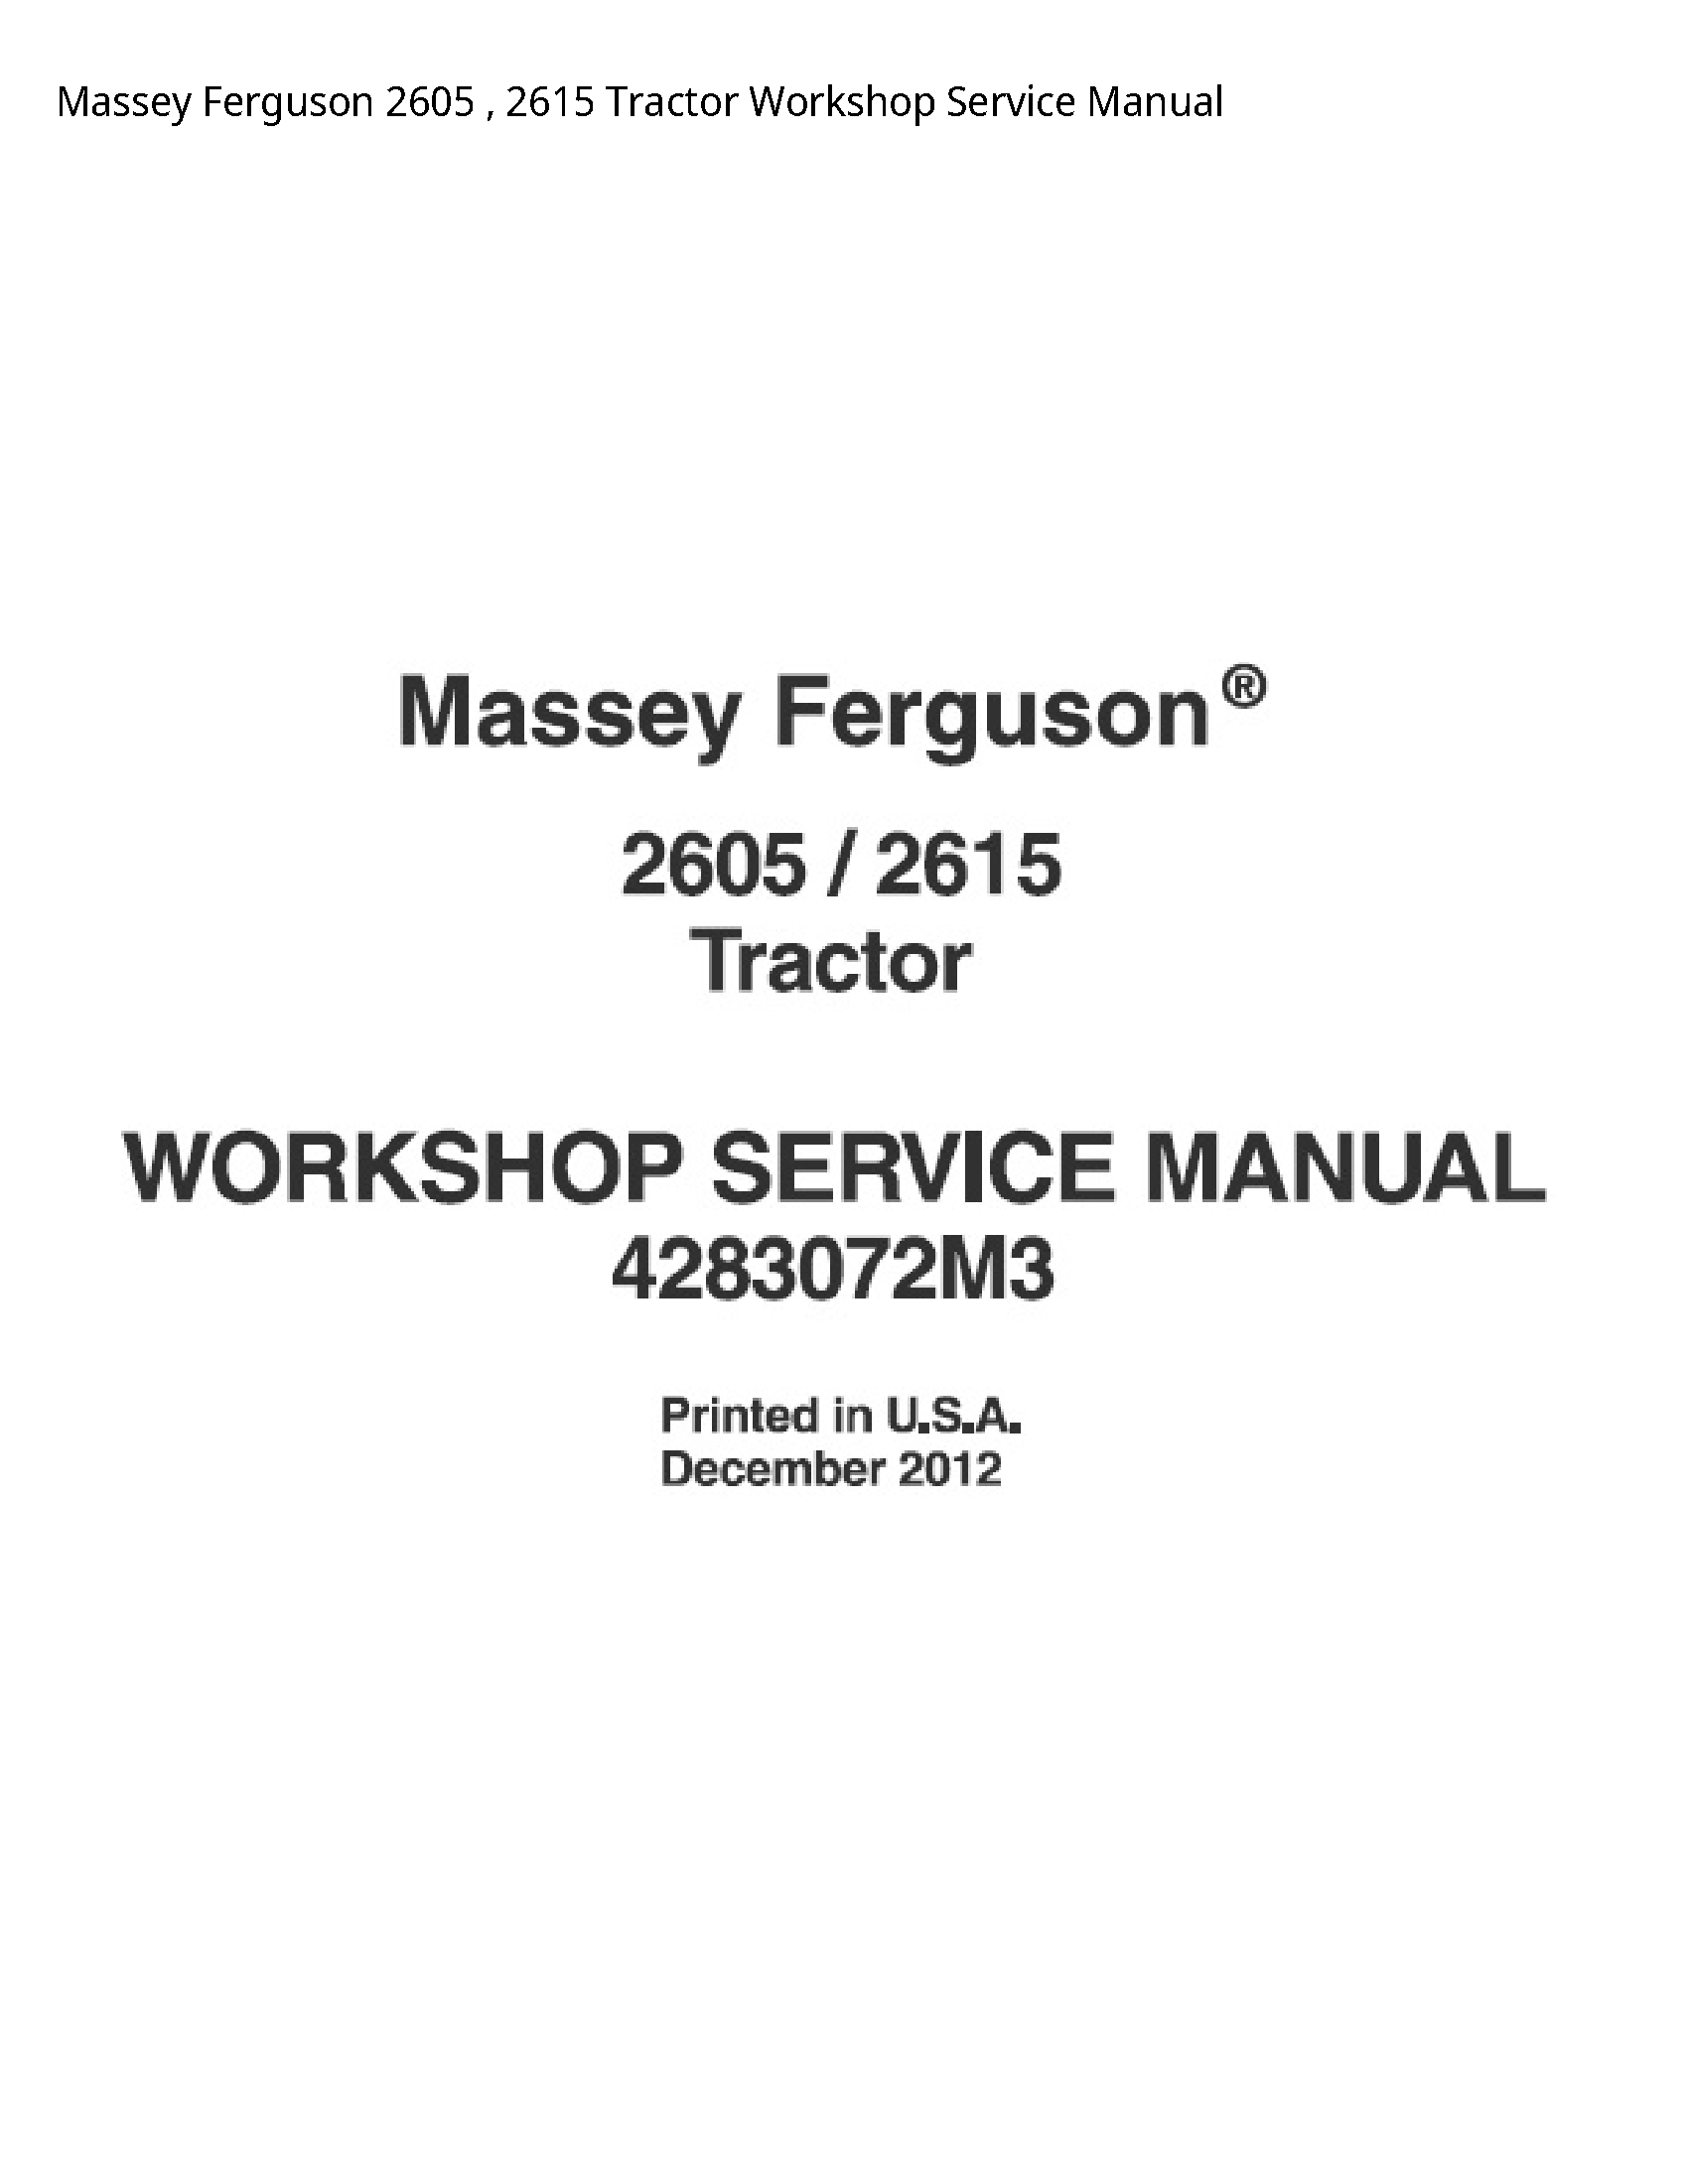 Massey Ferguson 2605 Tractor Service manual